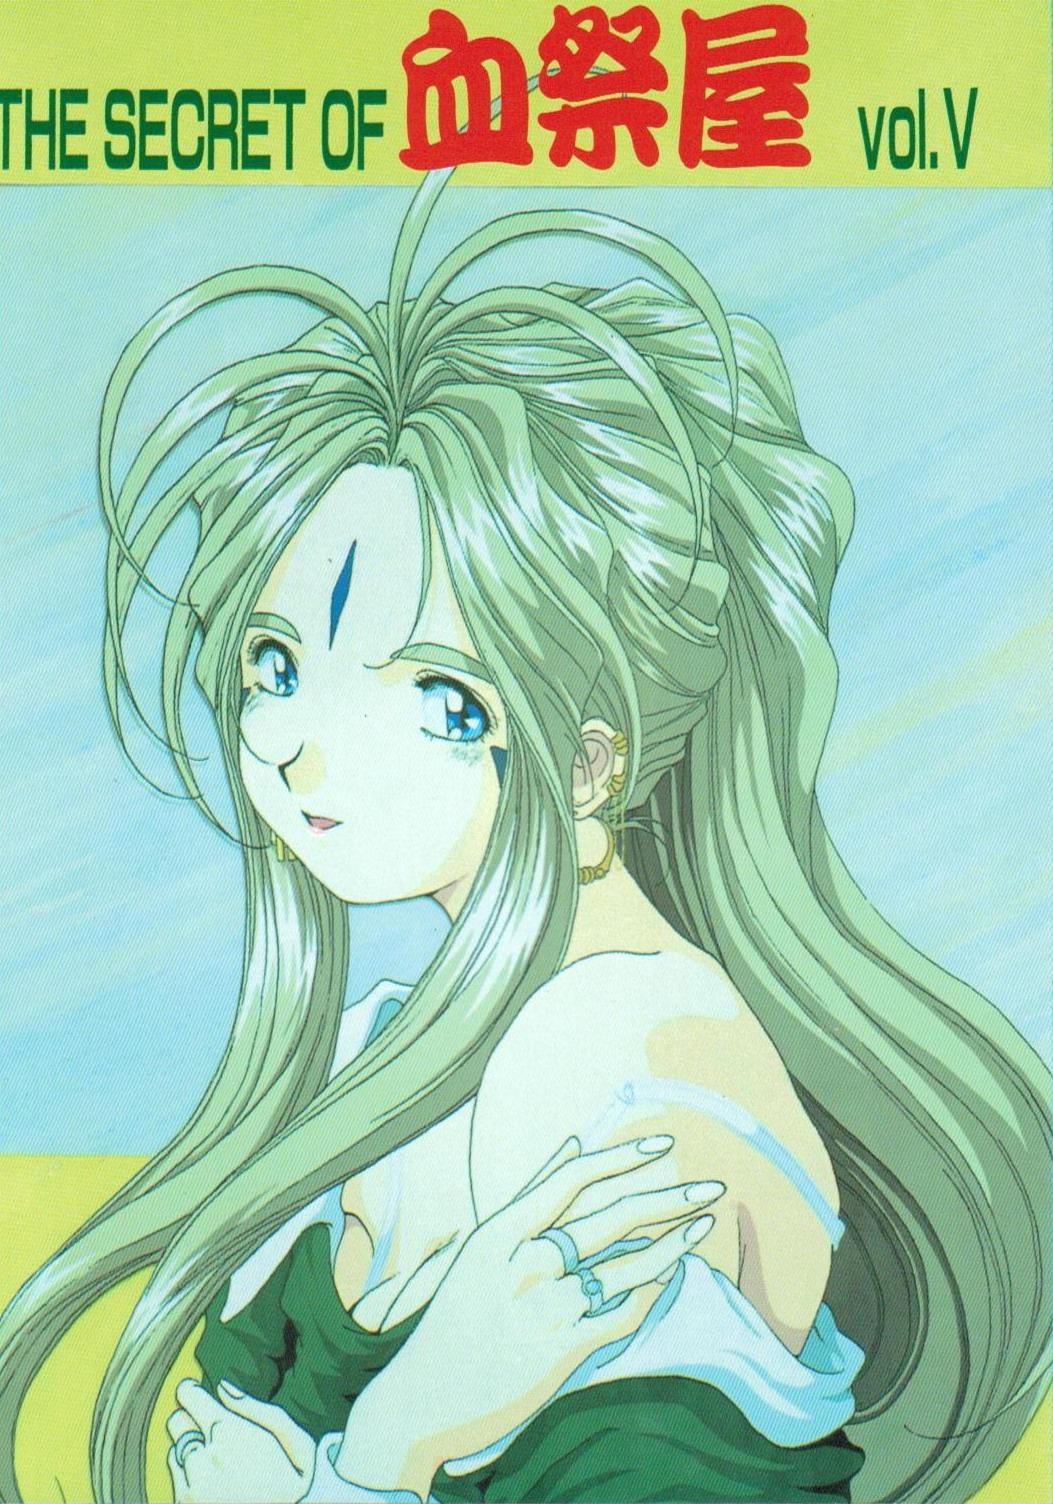 Webcamchat THE SECRET OF Chimatsuriya Vol. 5 - Ah my goddess Stepson - Picture 1